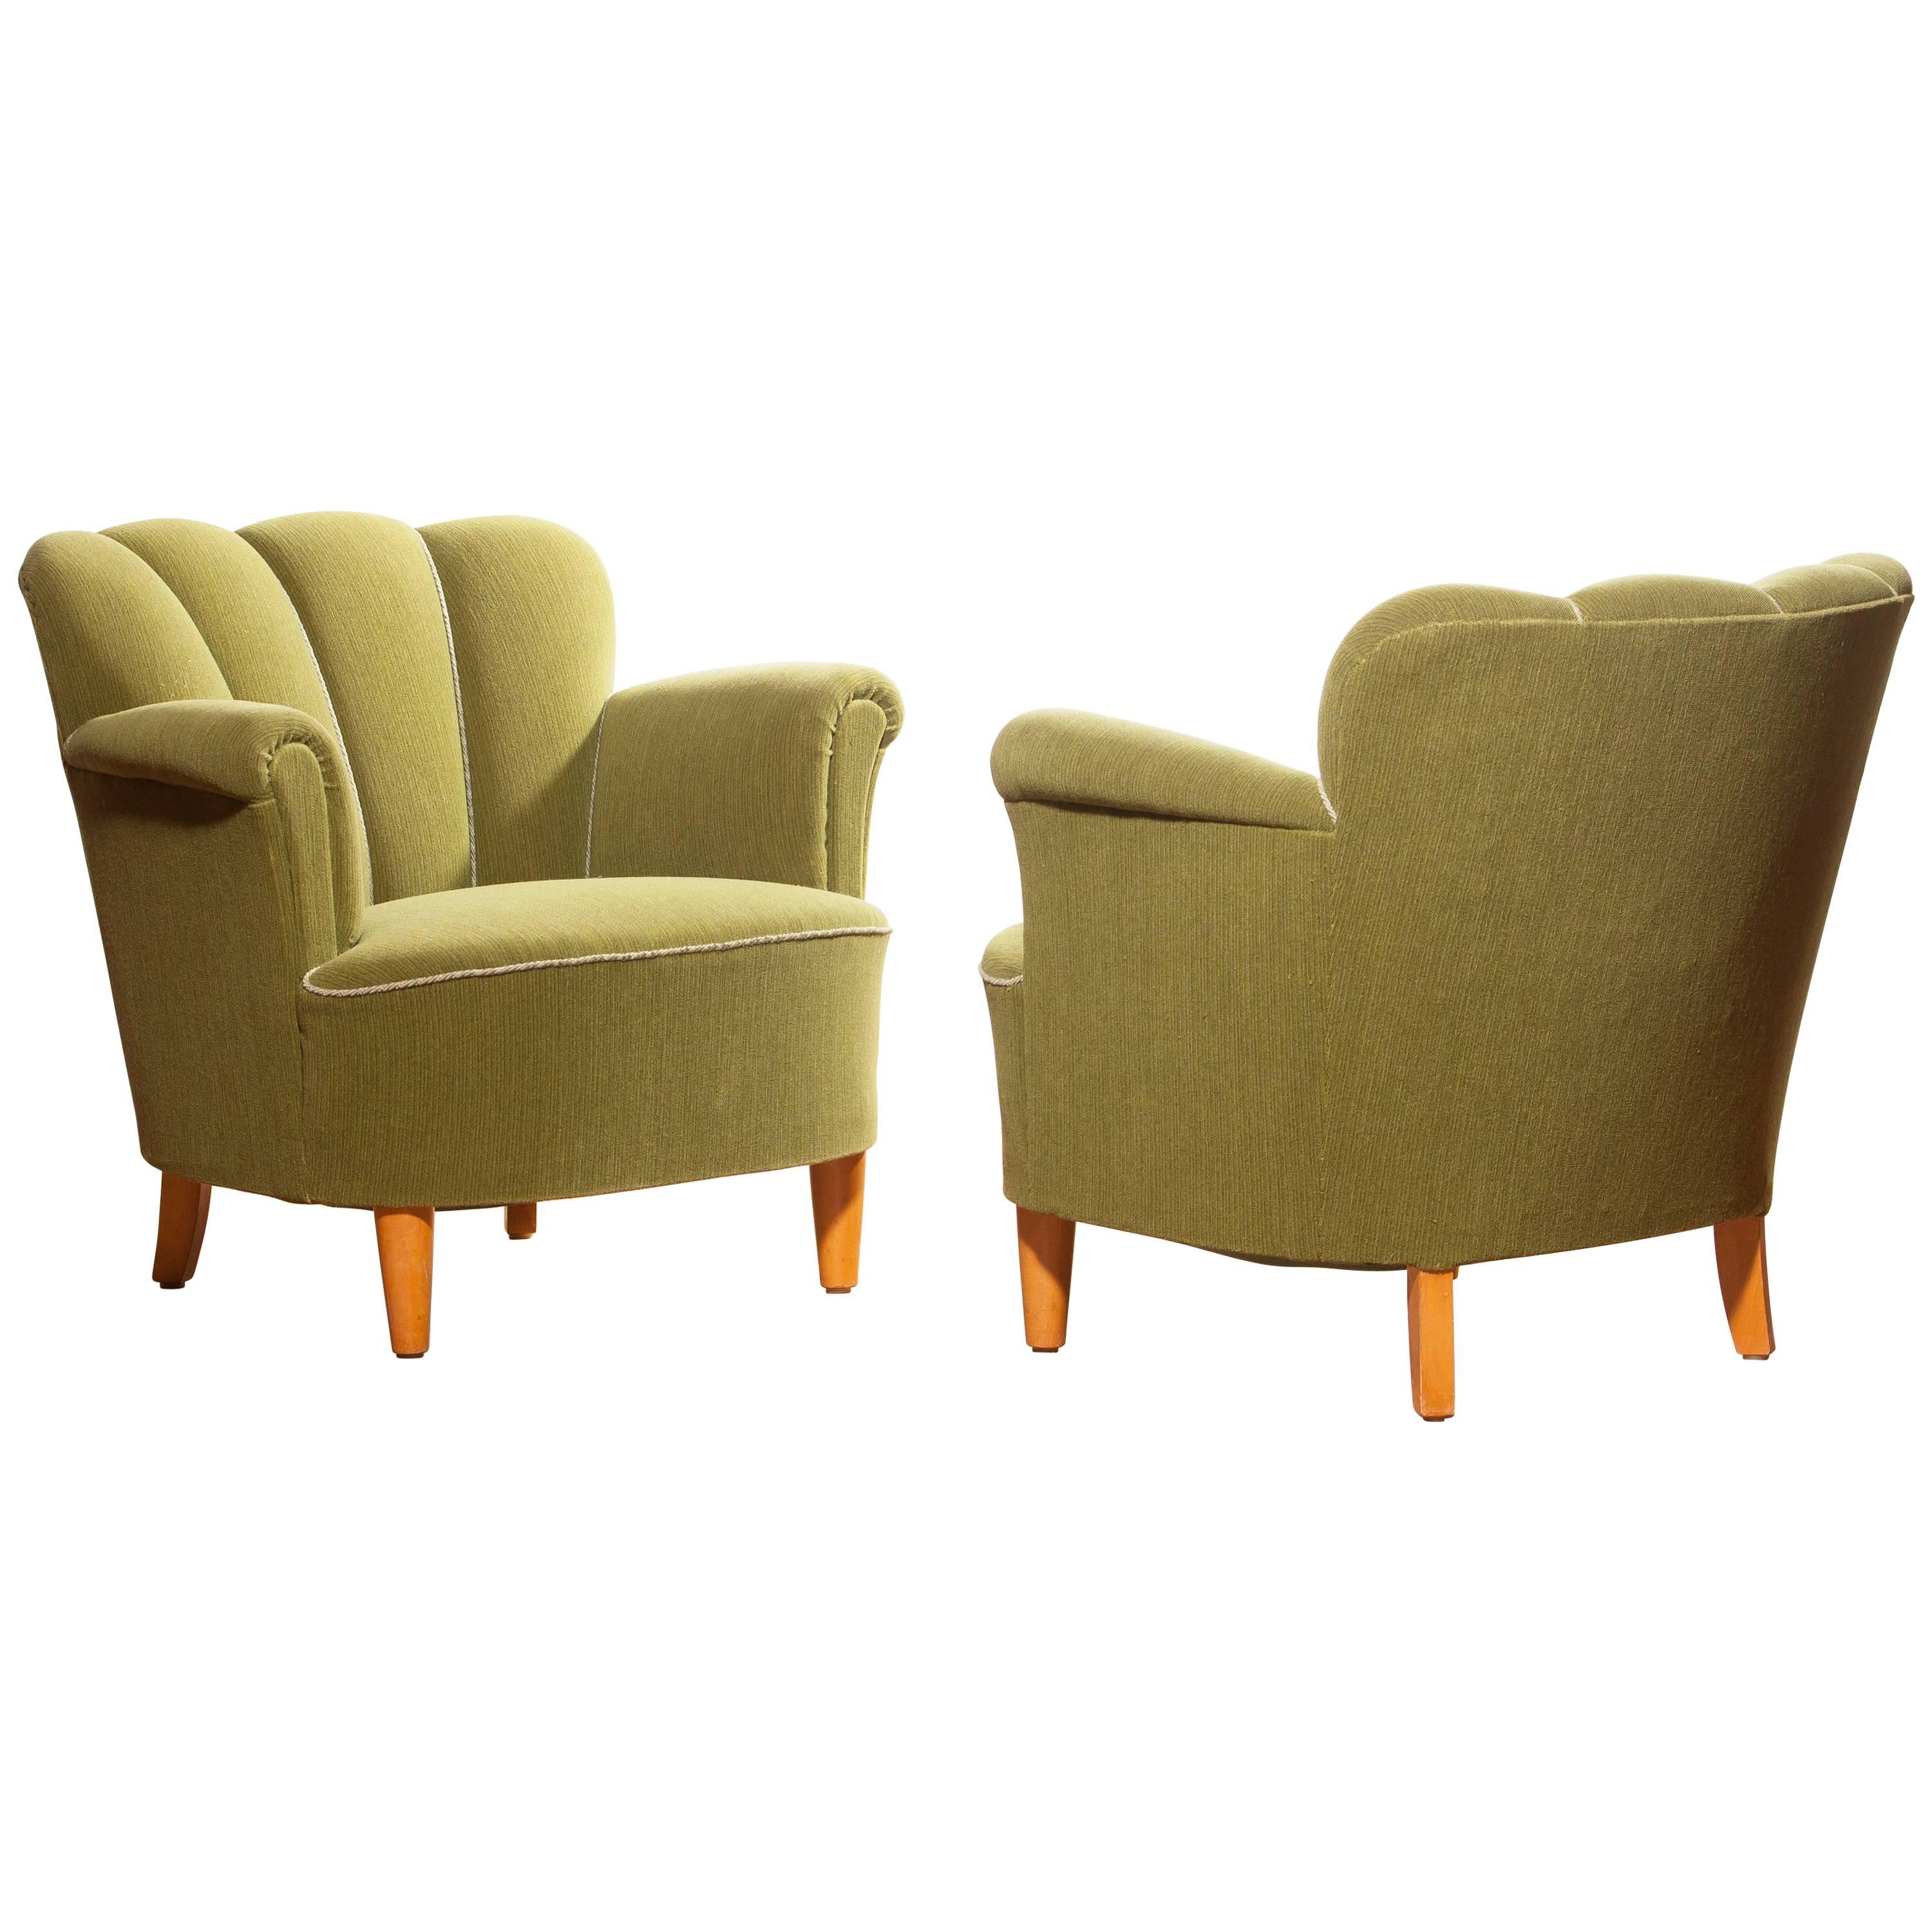 1940s, Swedish Set of Green Club Chairs